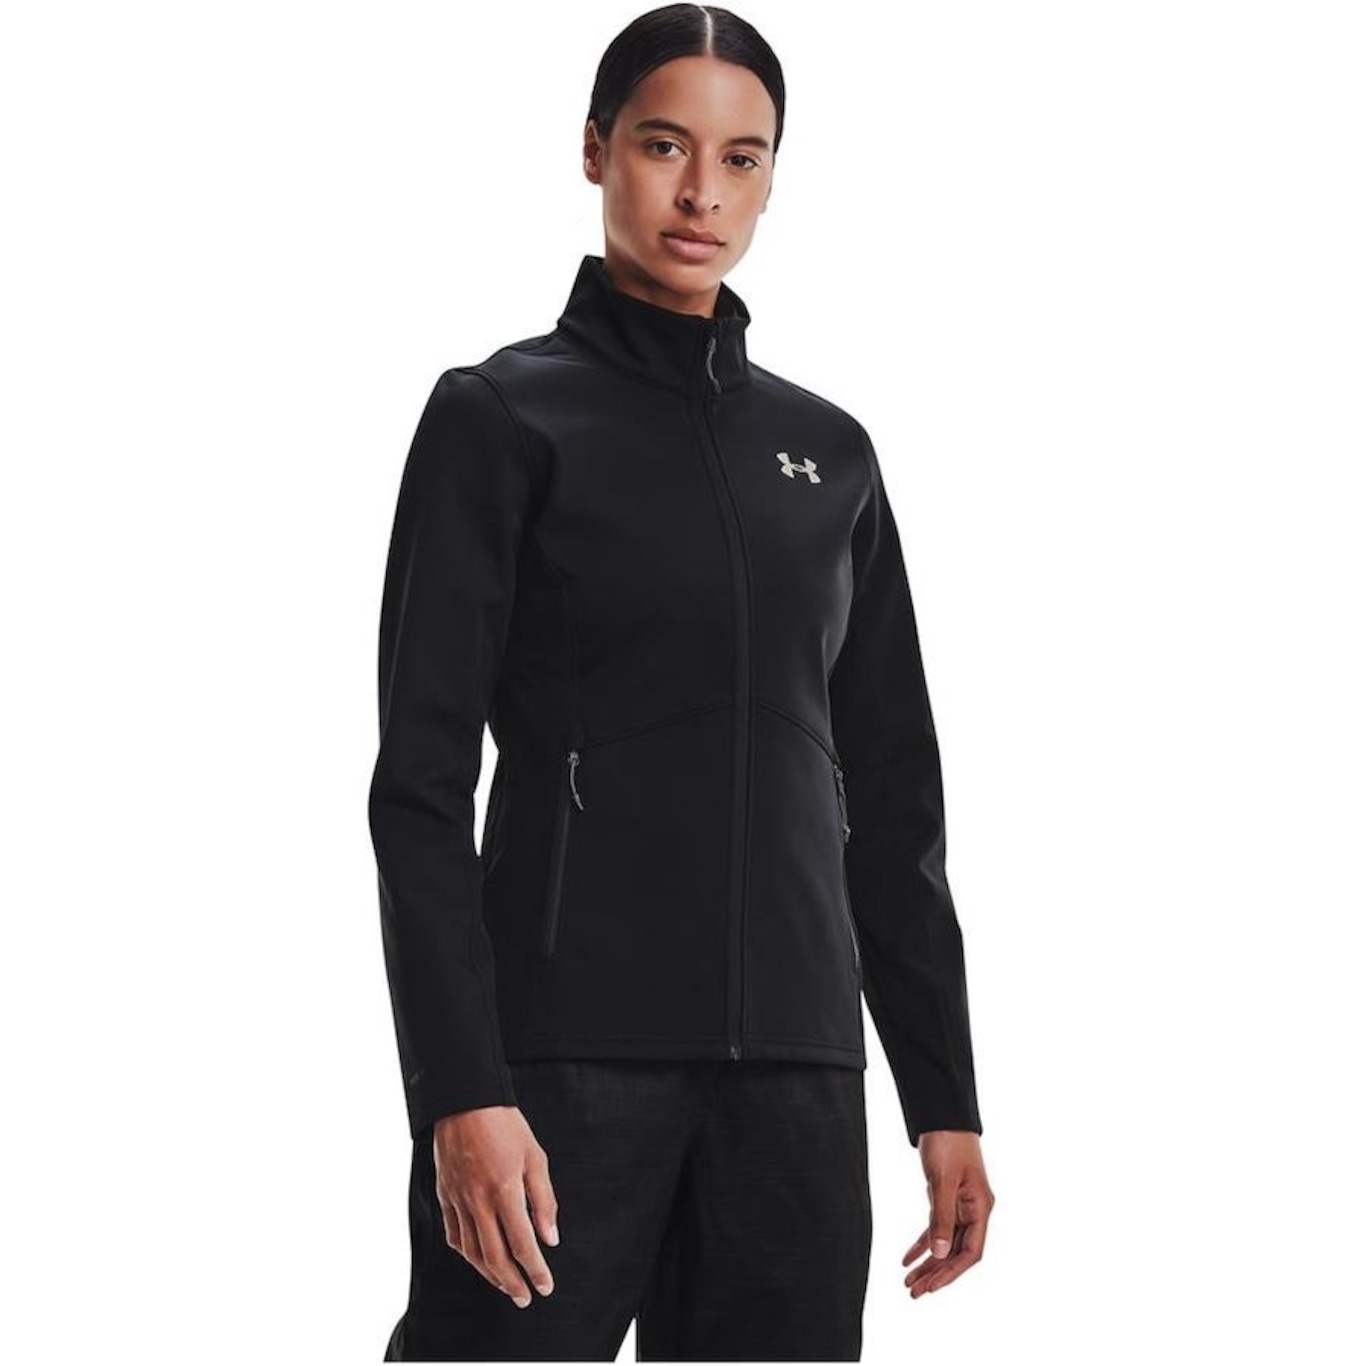 Ladies' ColdGear® Infrared Shield Jacket